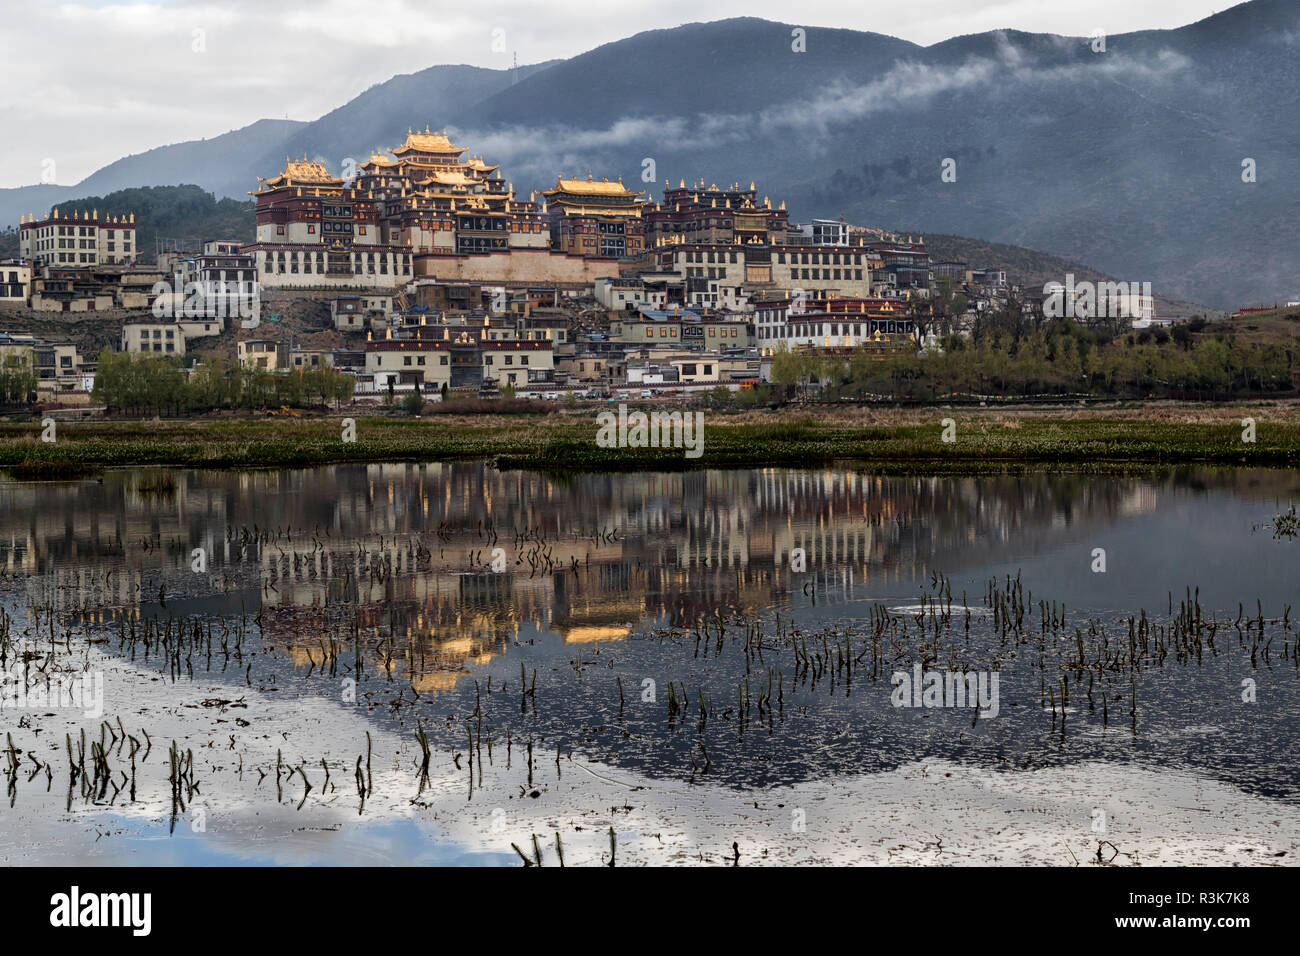 Asia, China, Yunnan Province, Shangri-la, Songzanlin Monastery. The monastery at dawn reflected in the sacred lake. Stock Photo